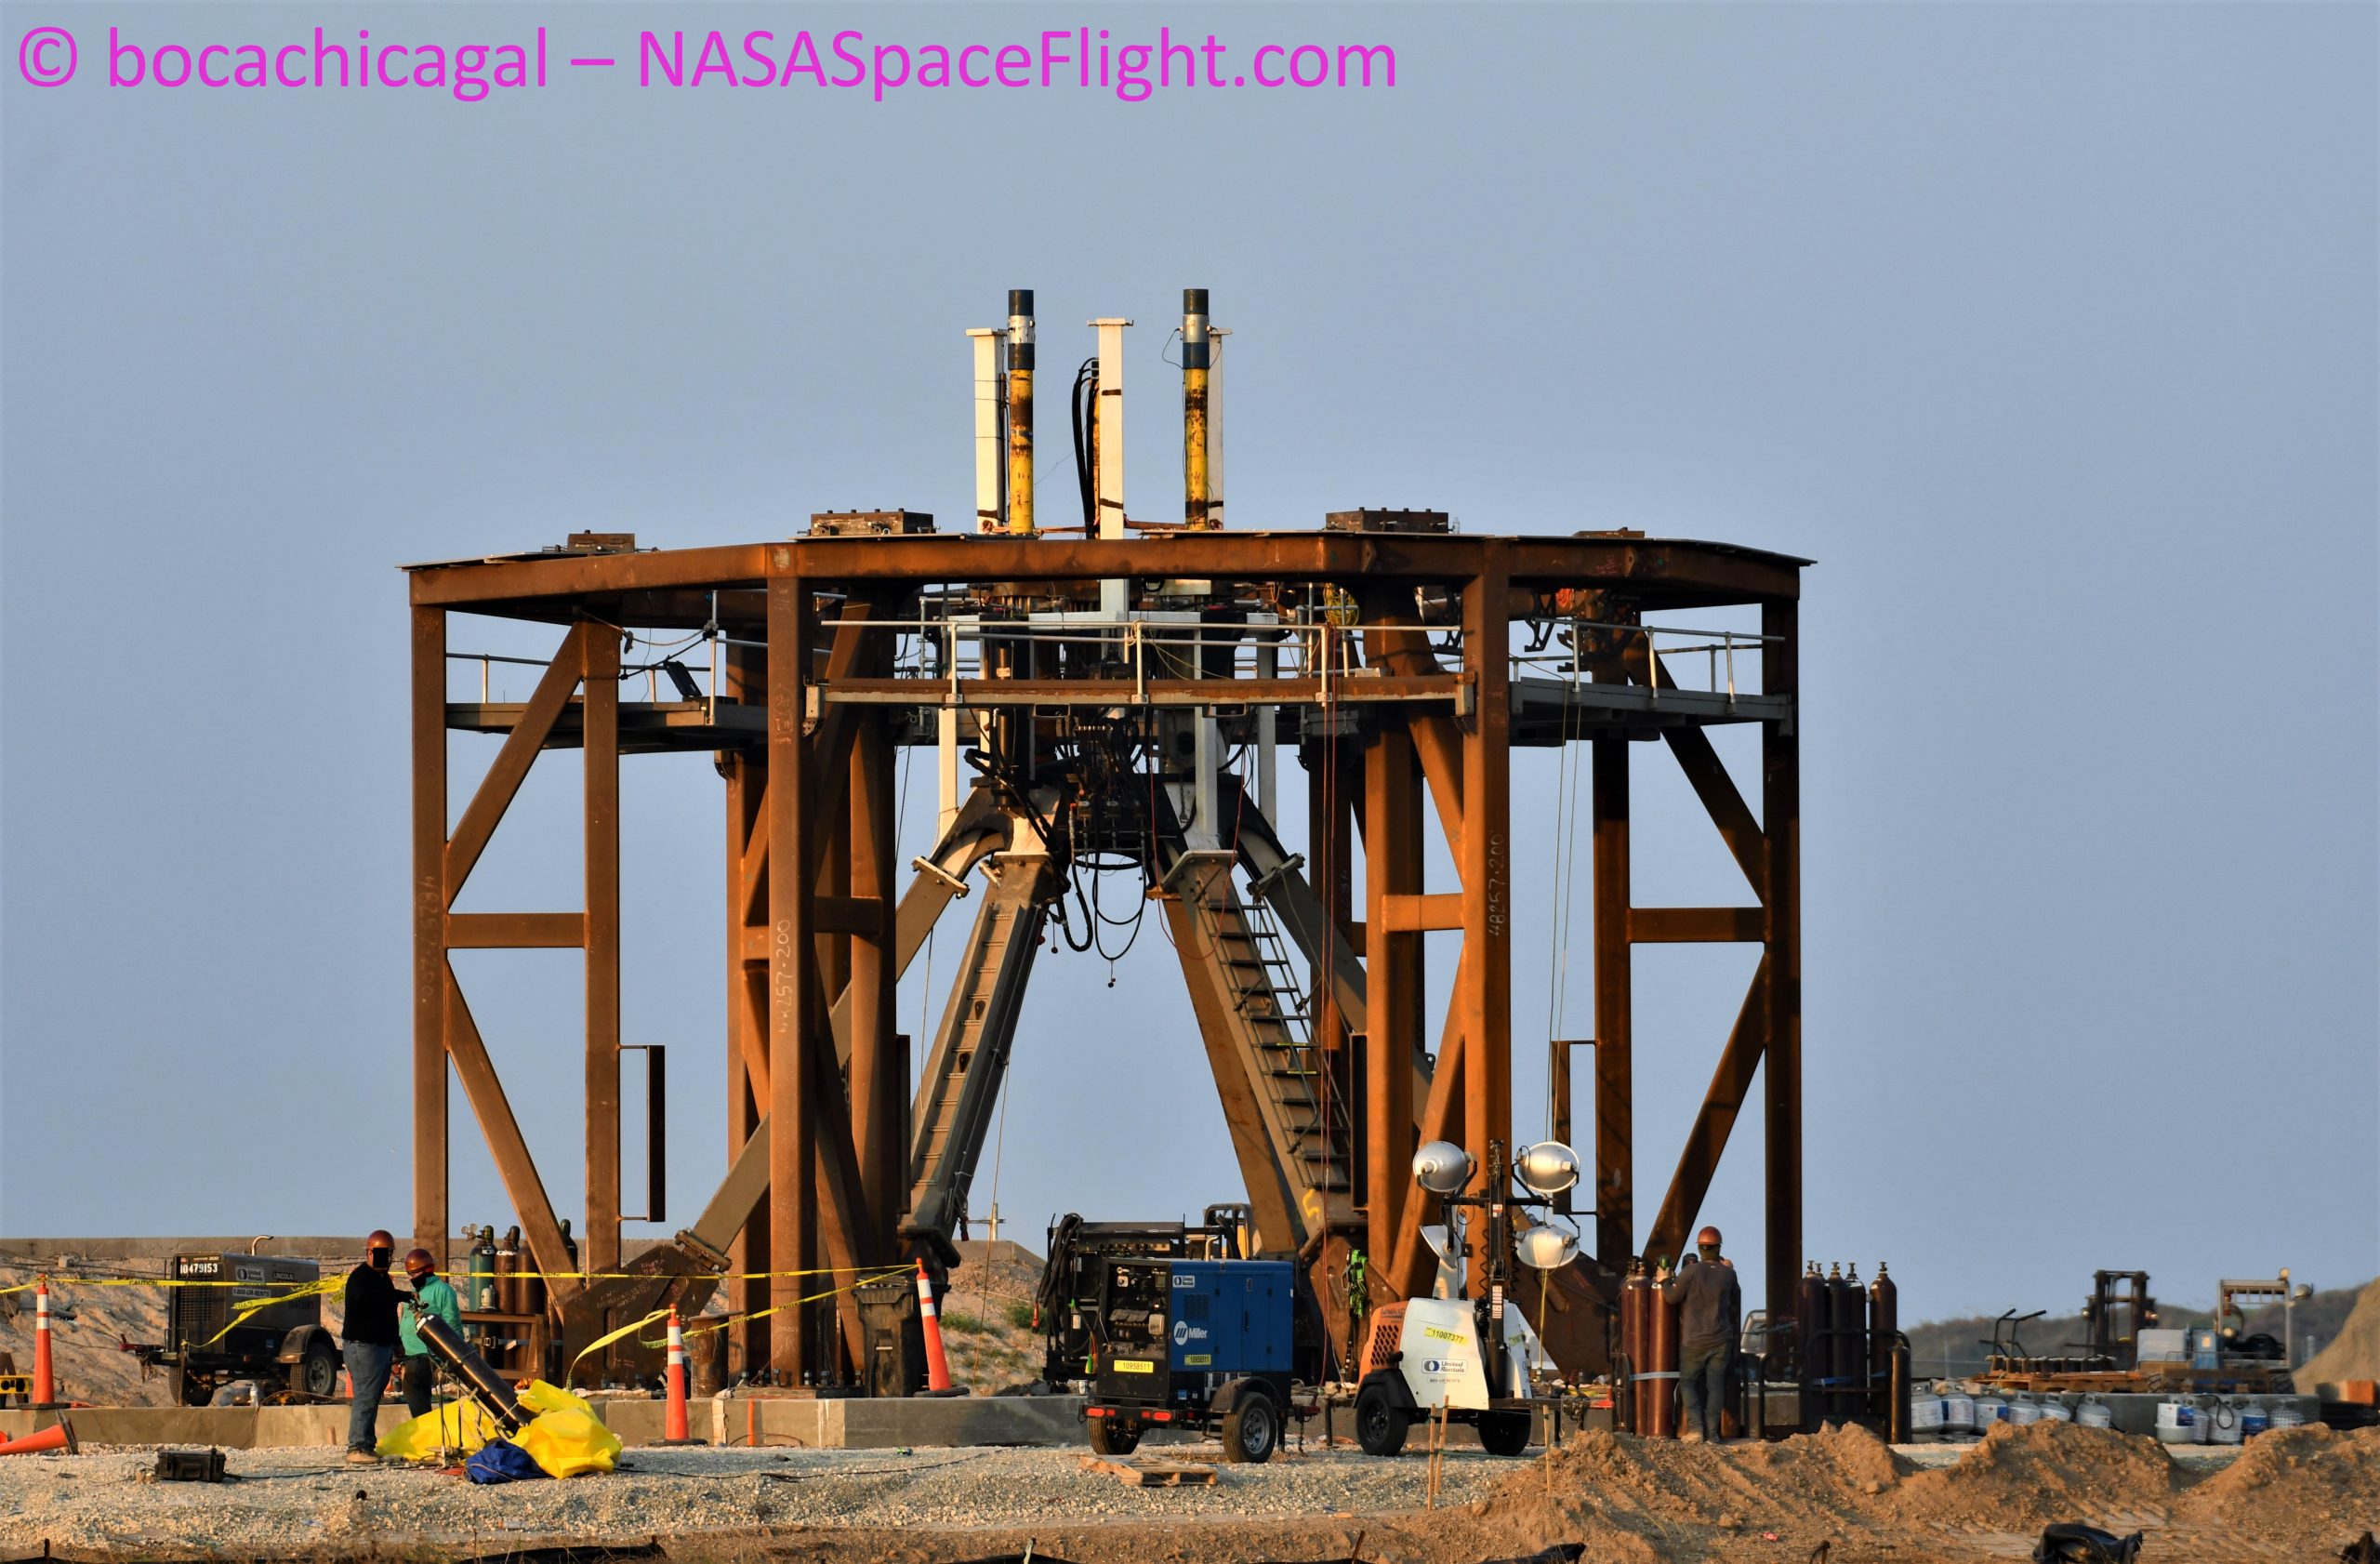 Starship Boca Chica 083020 (NASASpaceflight – bocachicagal) Launch mount #3 1